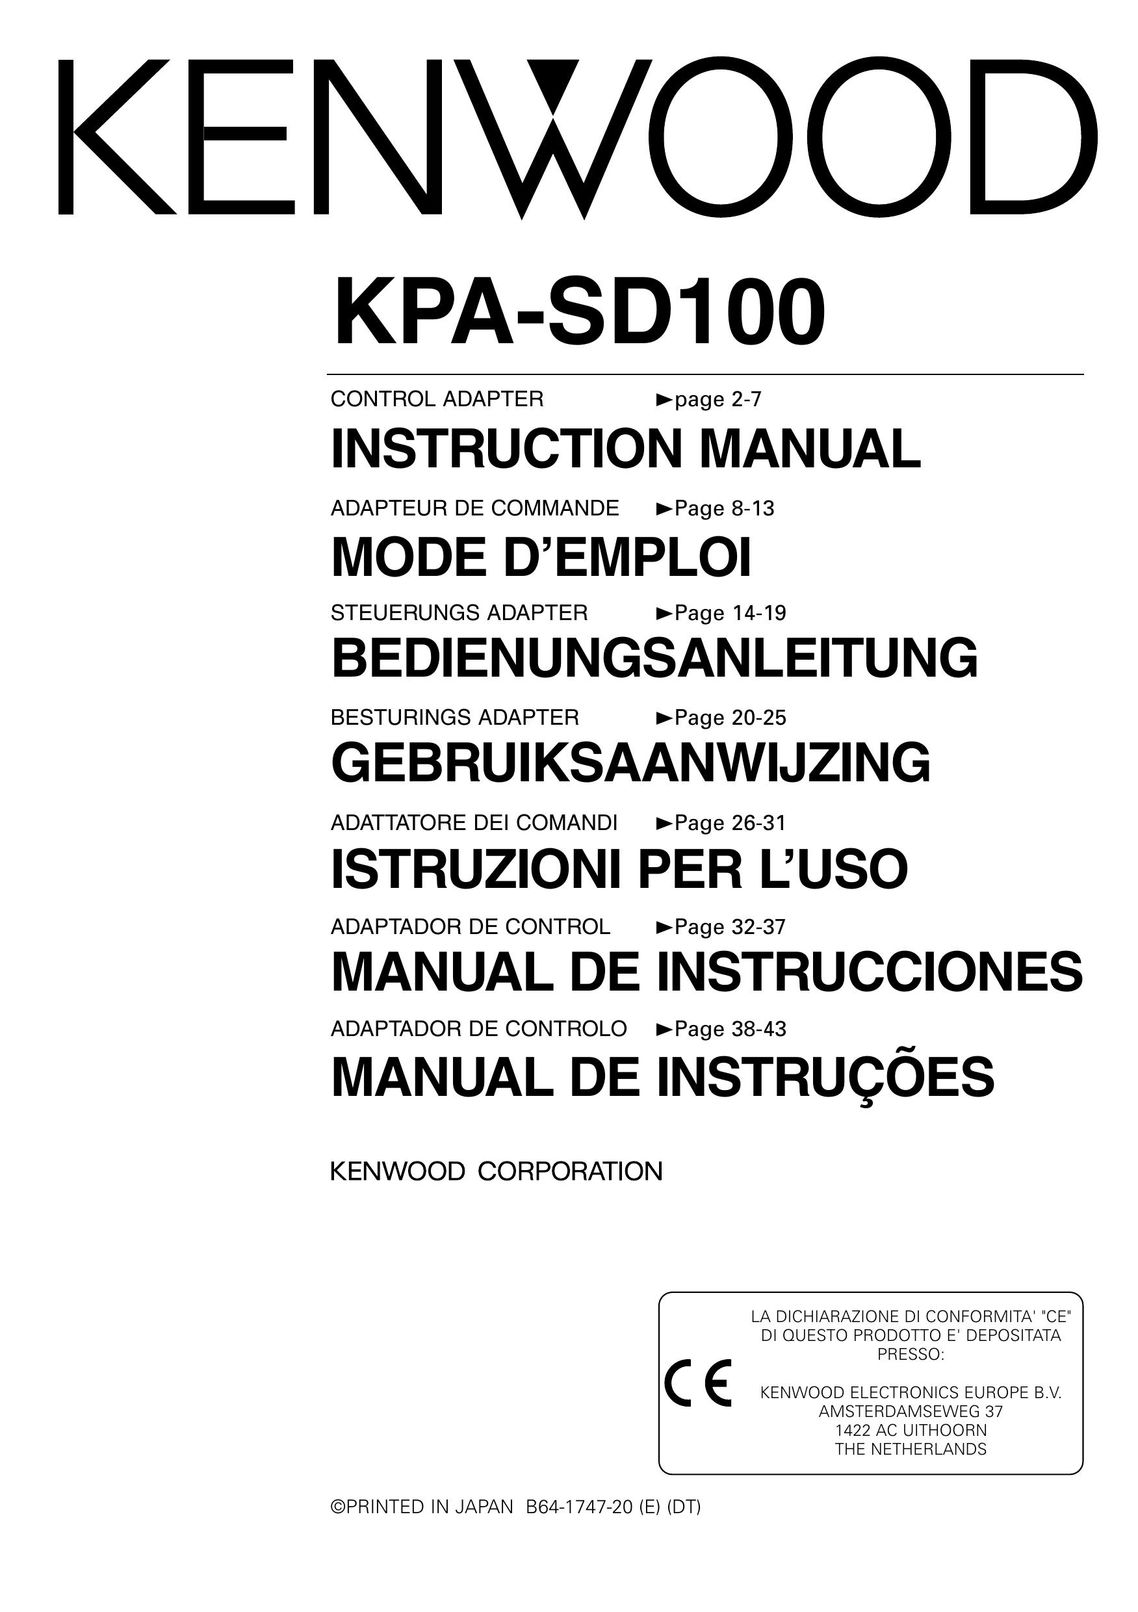 Kenwood KPA-SD100 Network Card User Manual